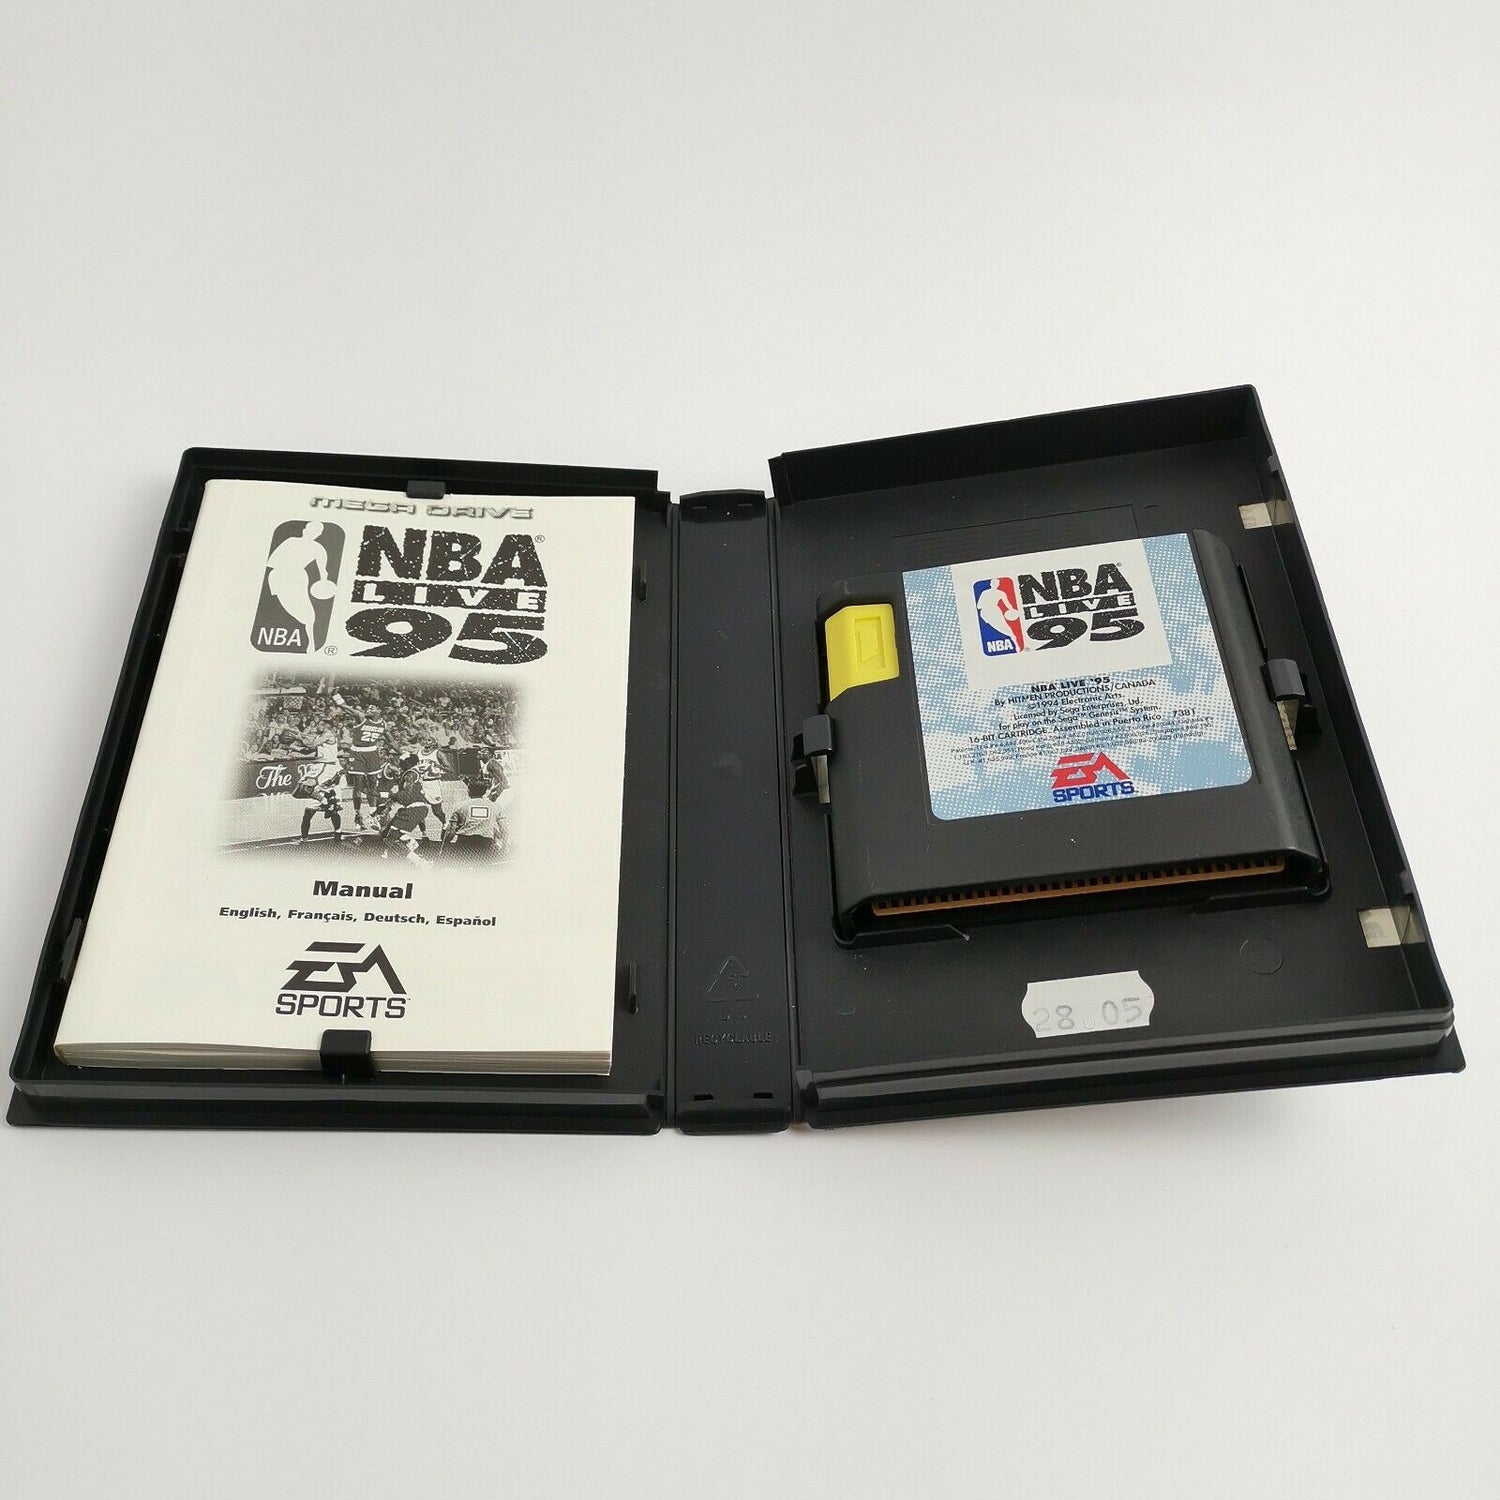 Sega Mega Drive Game 